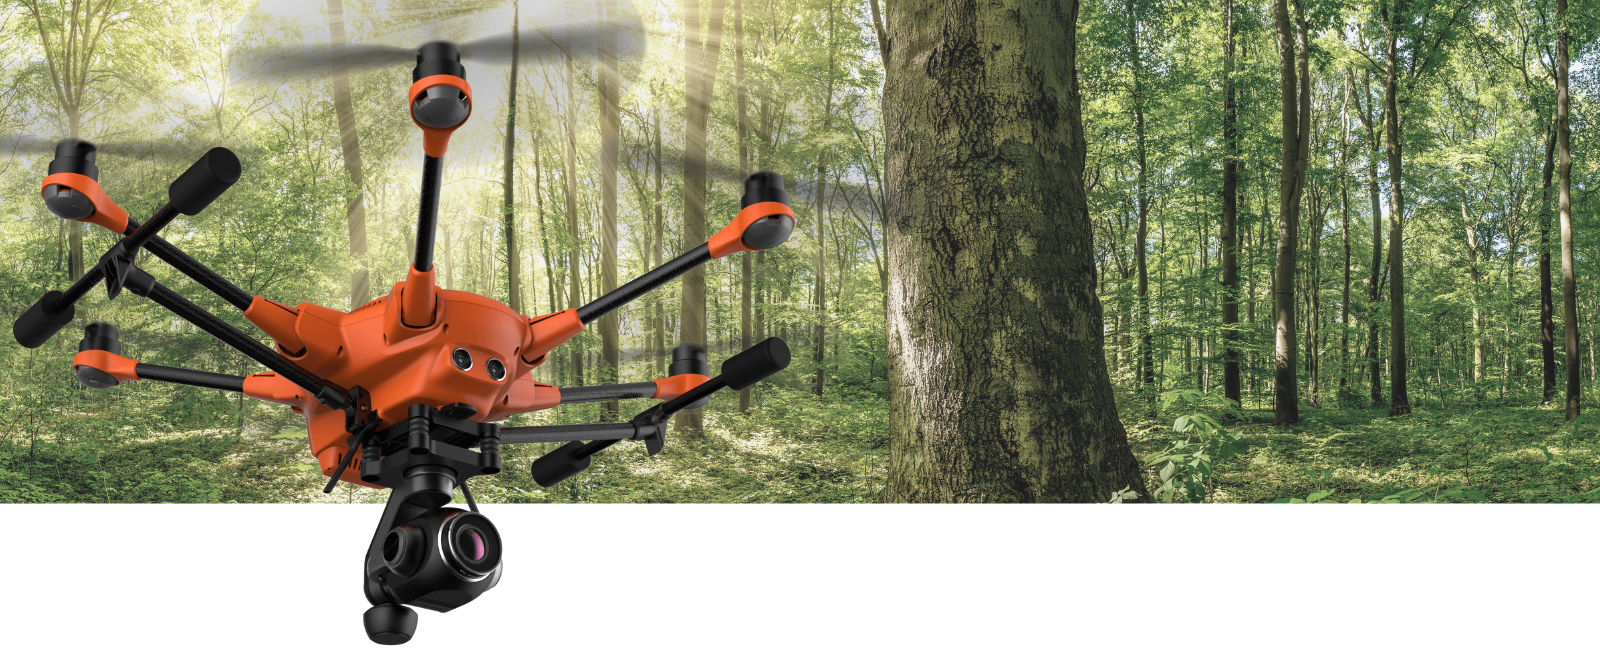 H520 - dron do monitorowania lasów